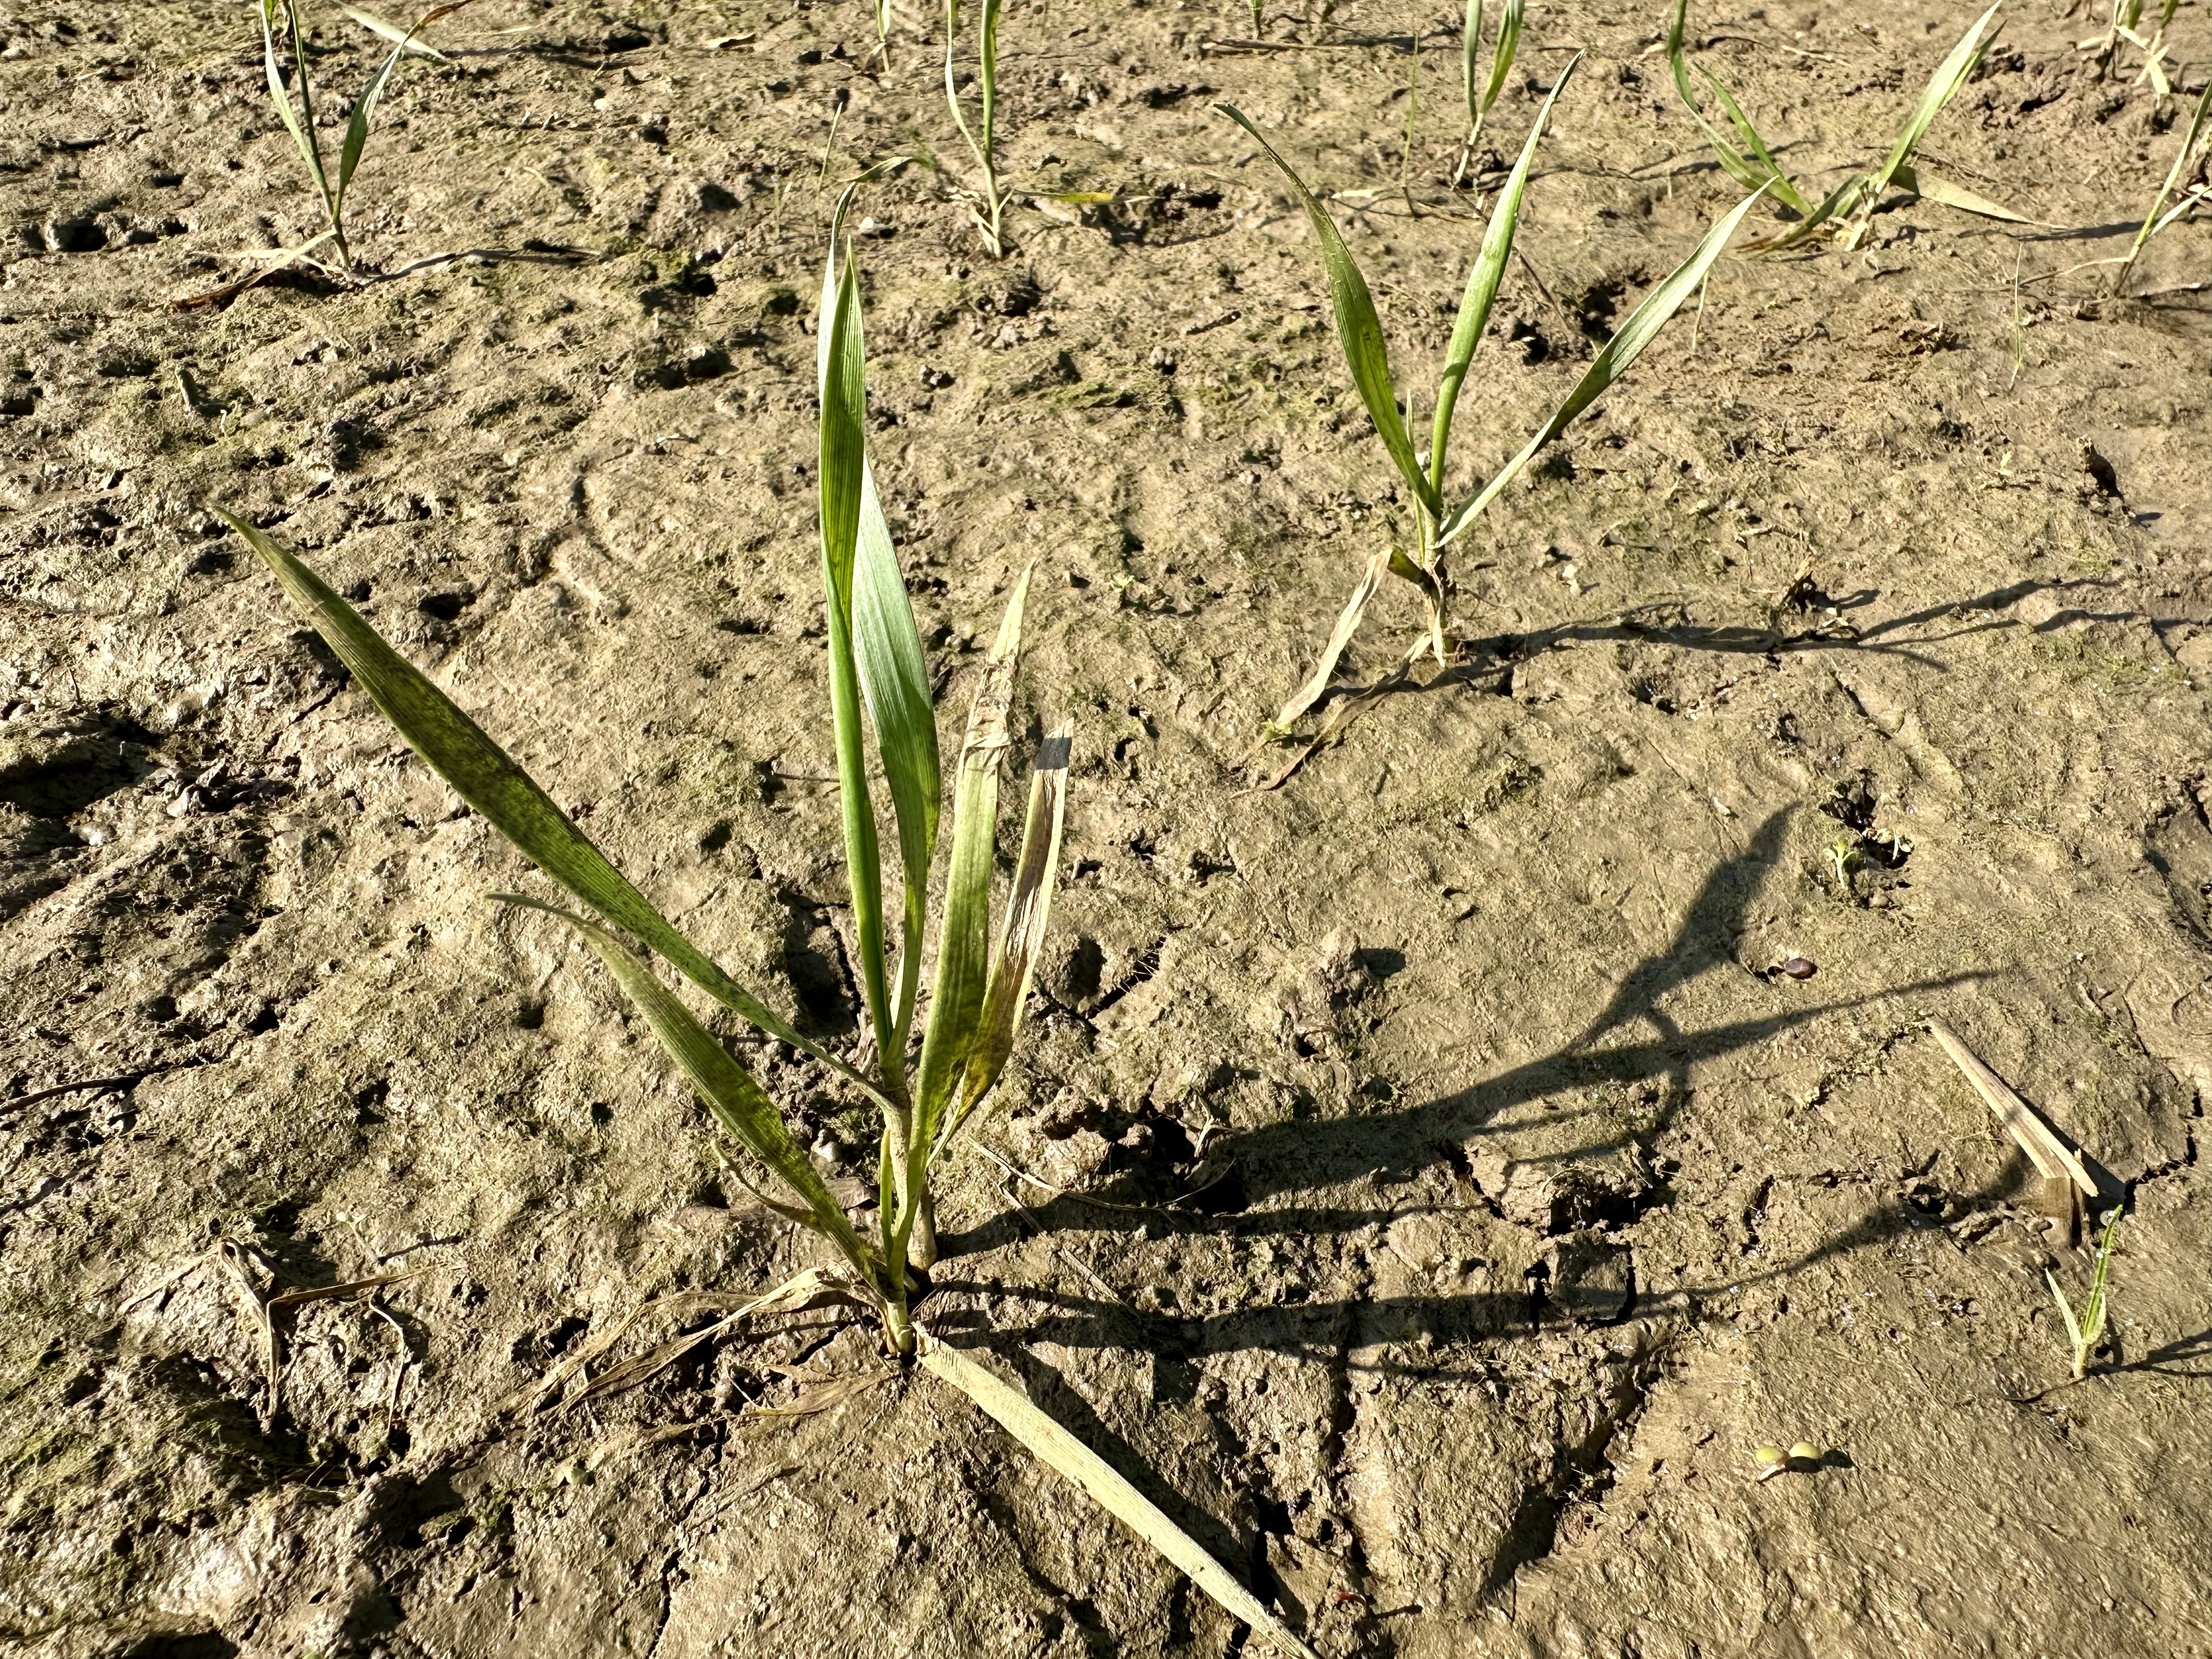 Flood damaged winter wheat grows unsatisfactorily, in a muddy wasteland. /Kitty Logan/CGTN Europe